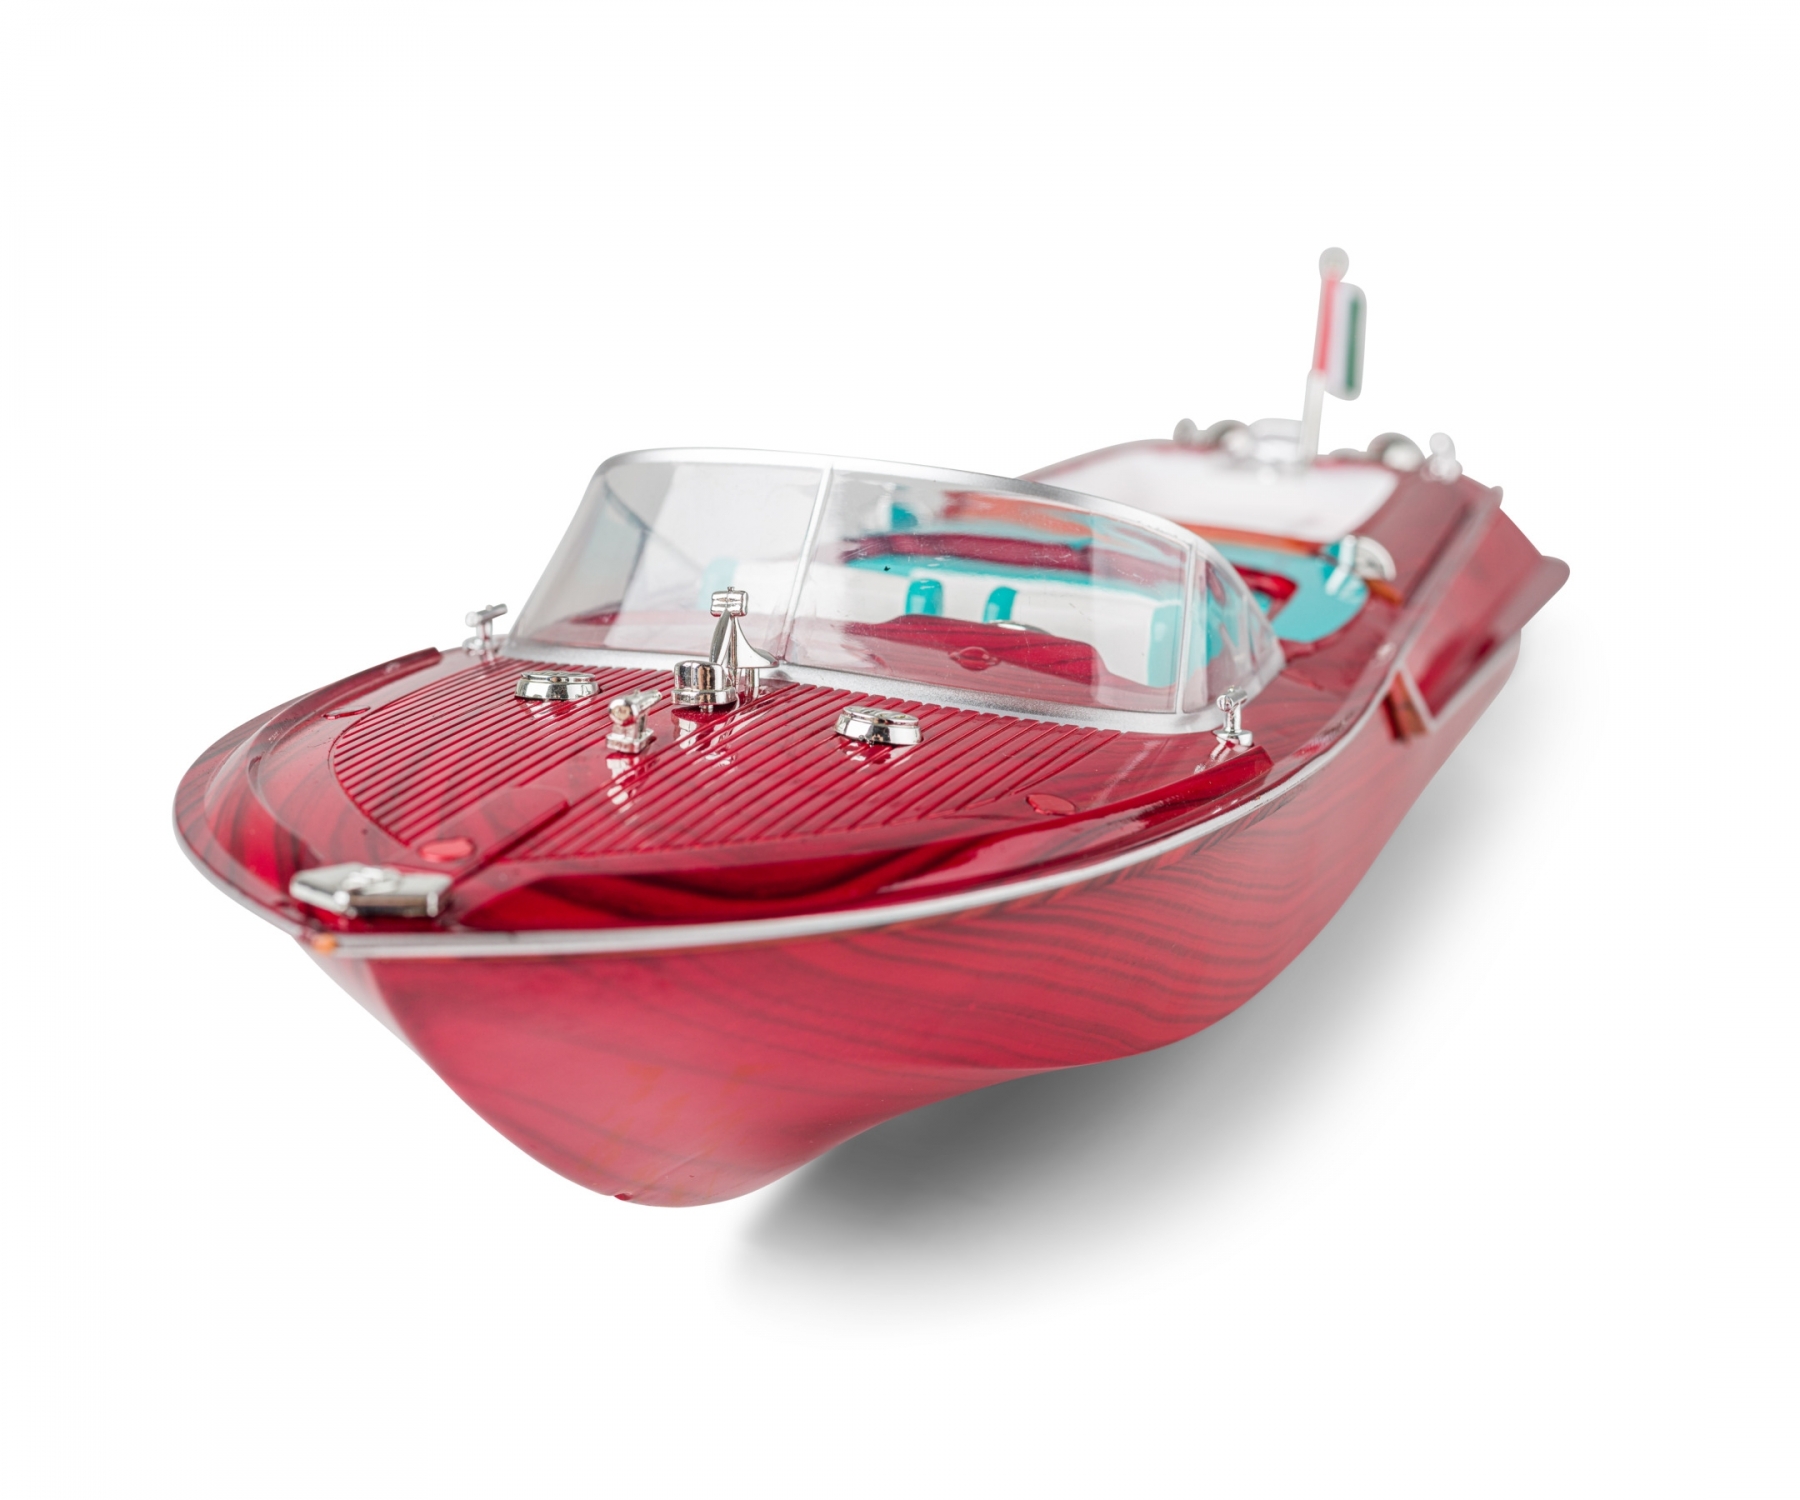 carson-500108055-3-Bella-Luisa-Sportboot-Holzoptik-Lago-Maggiore-Garda